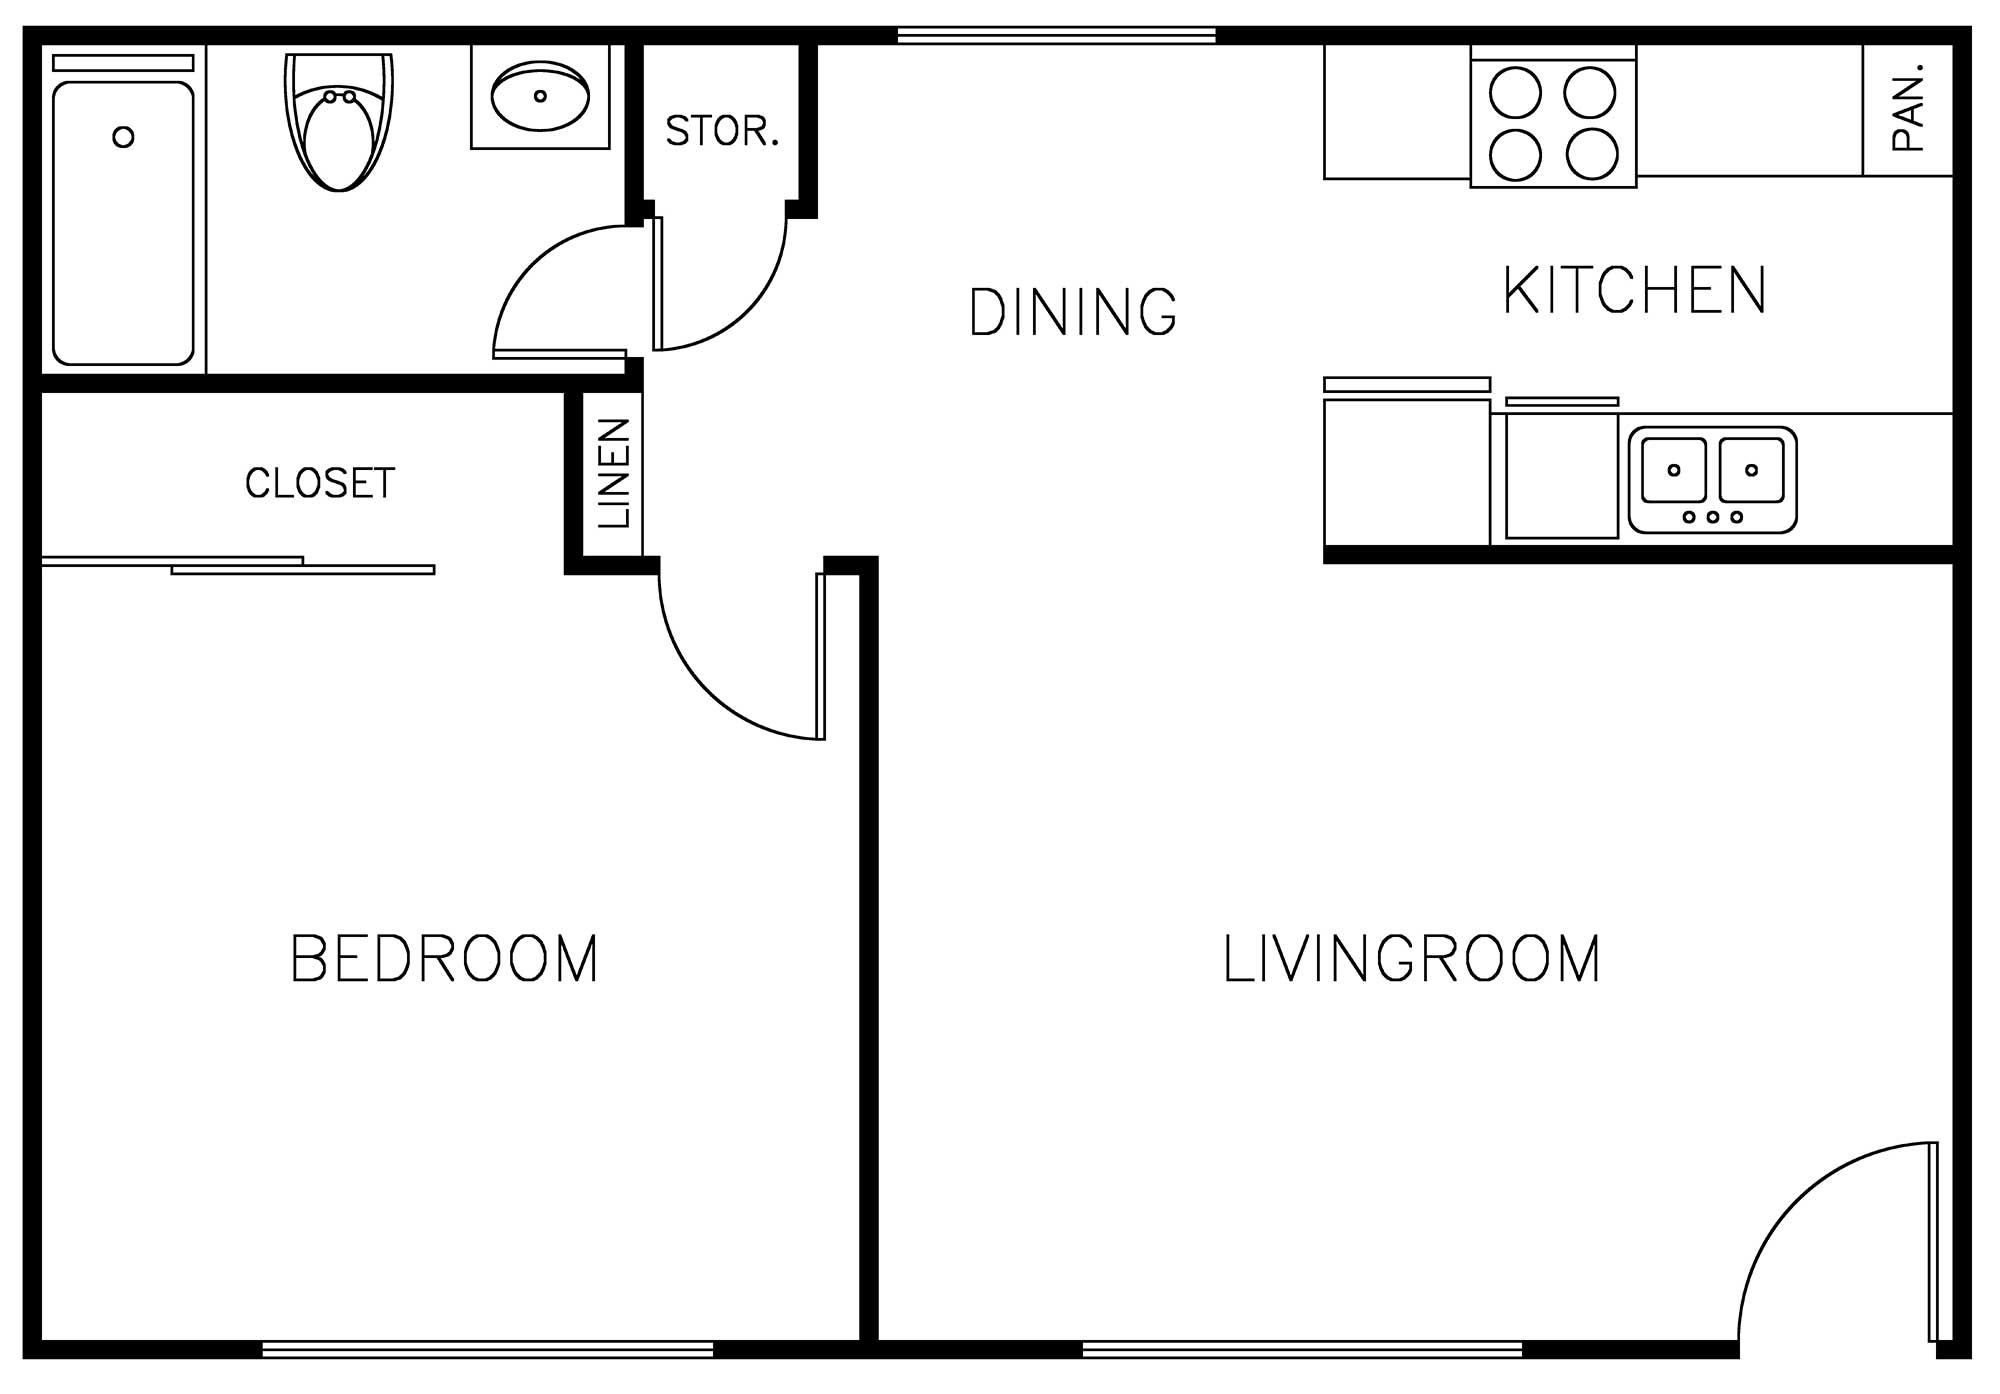 9212 Burke Street Apartments: 1 Bedroom floor plan